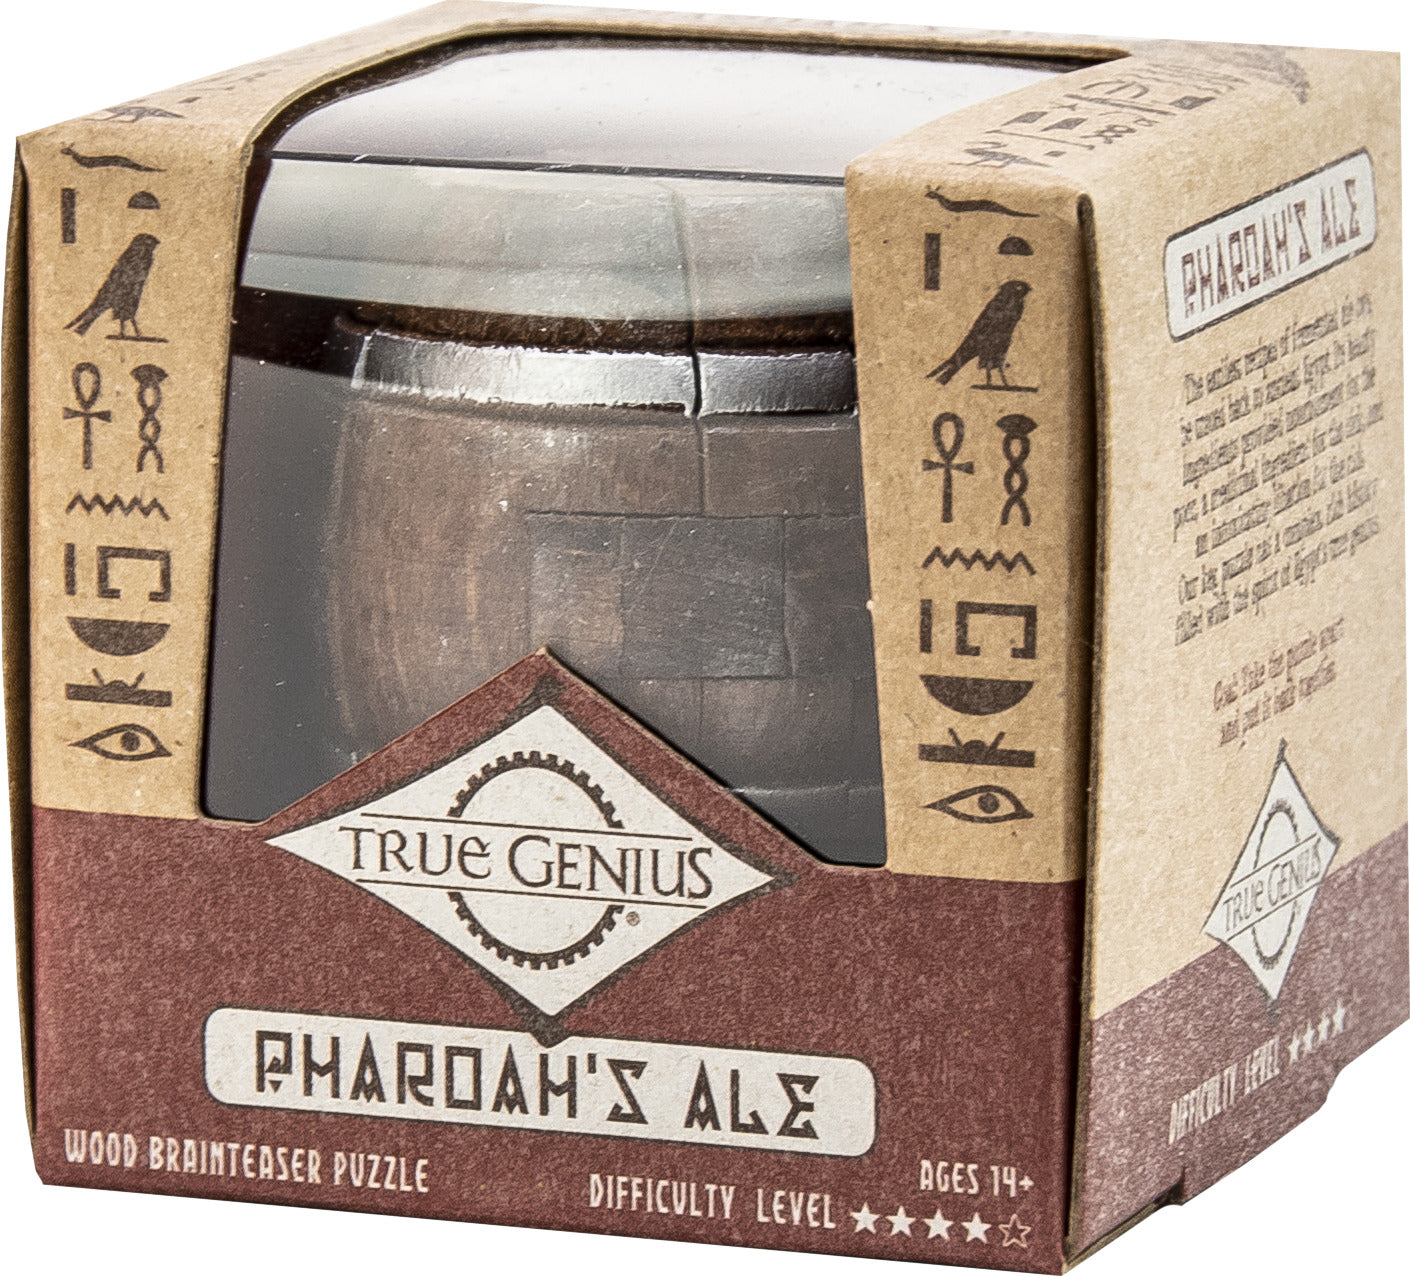 Pharaoh's Ale